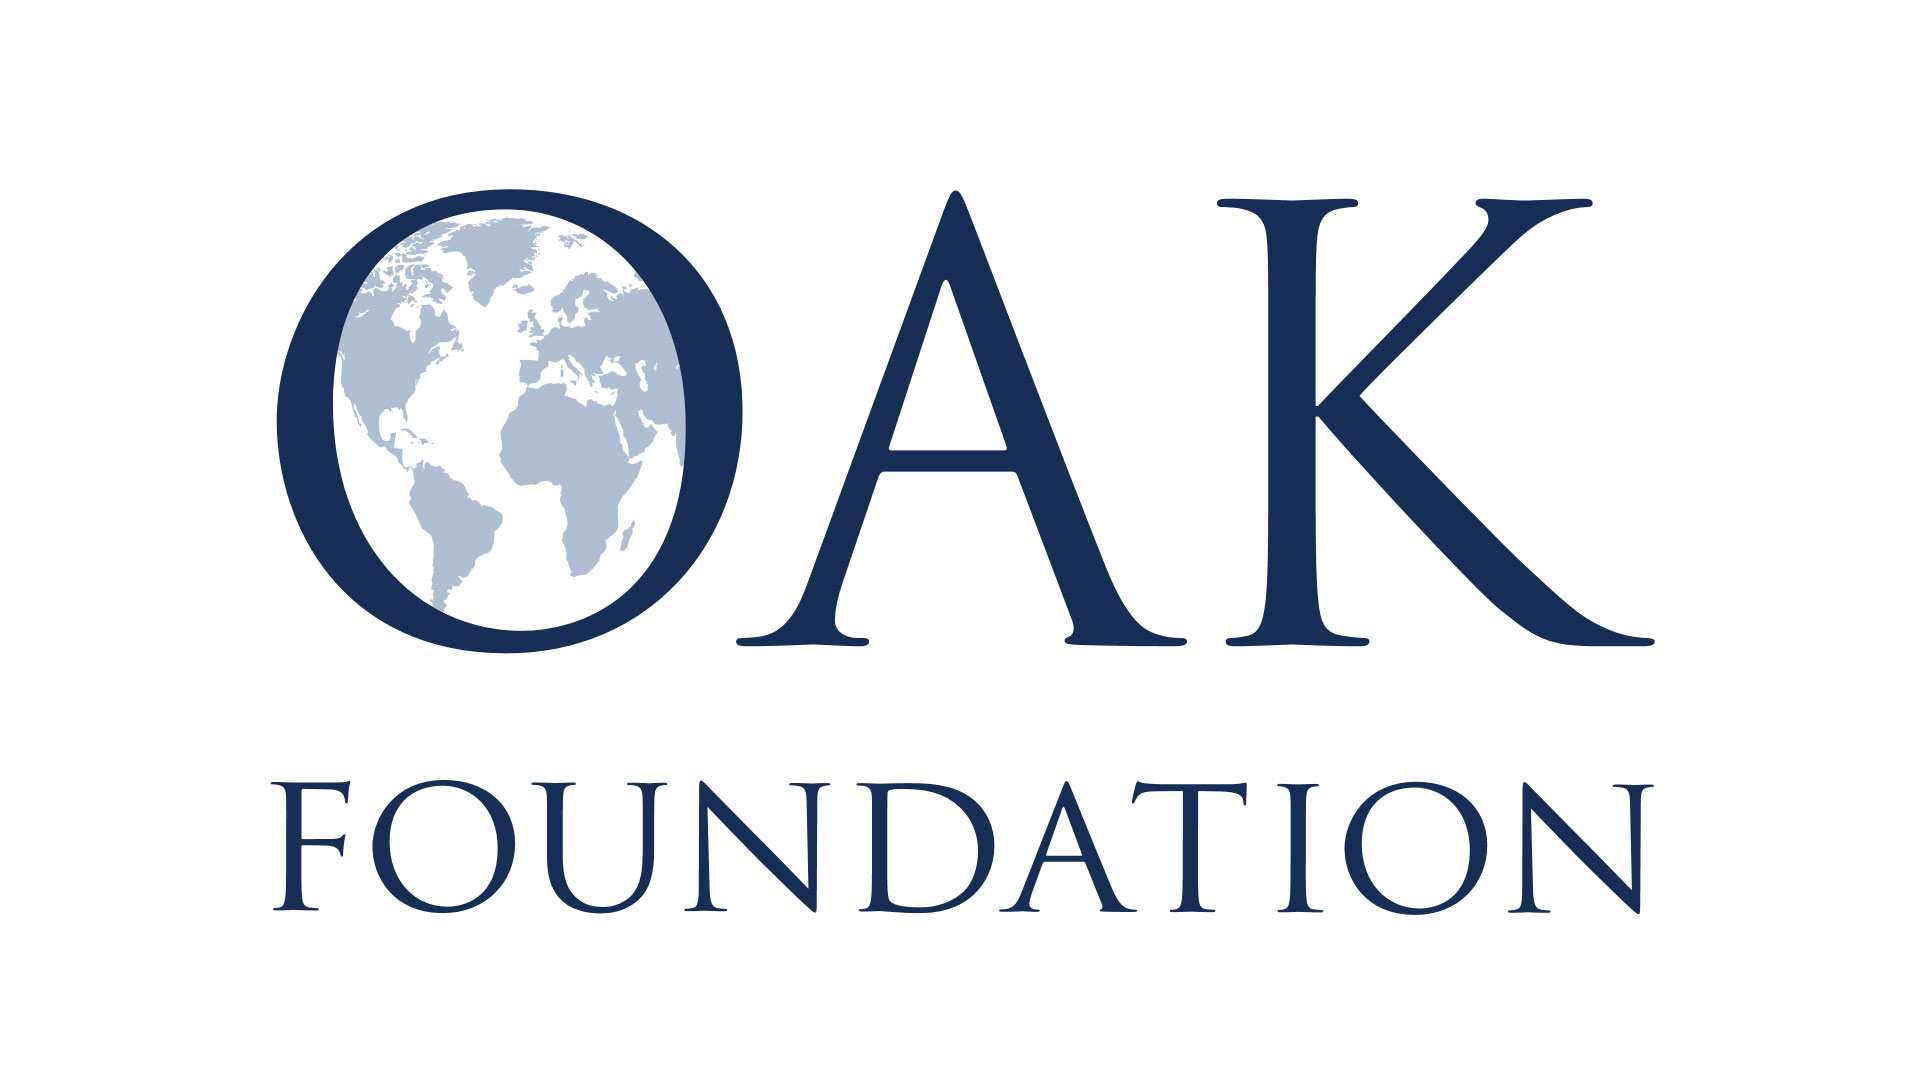 Oak foundation logo.